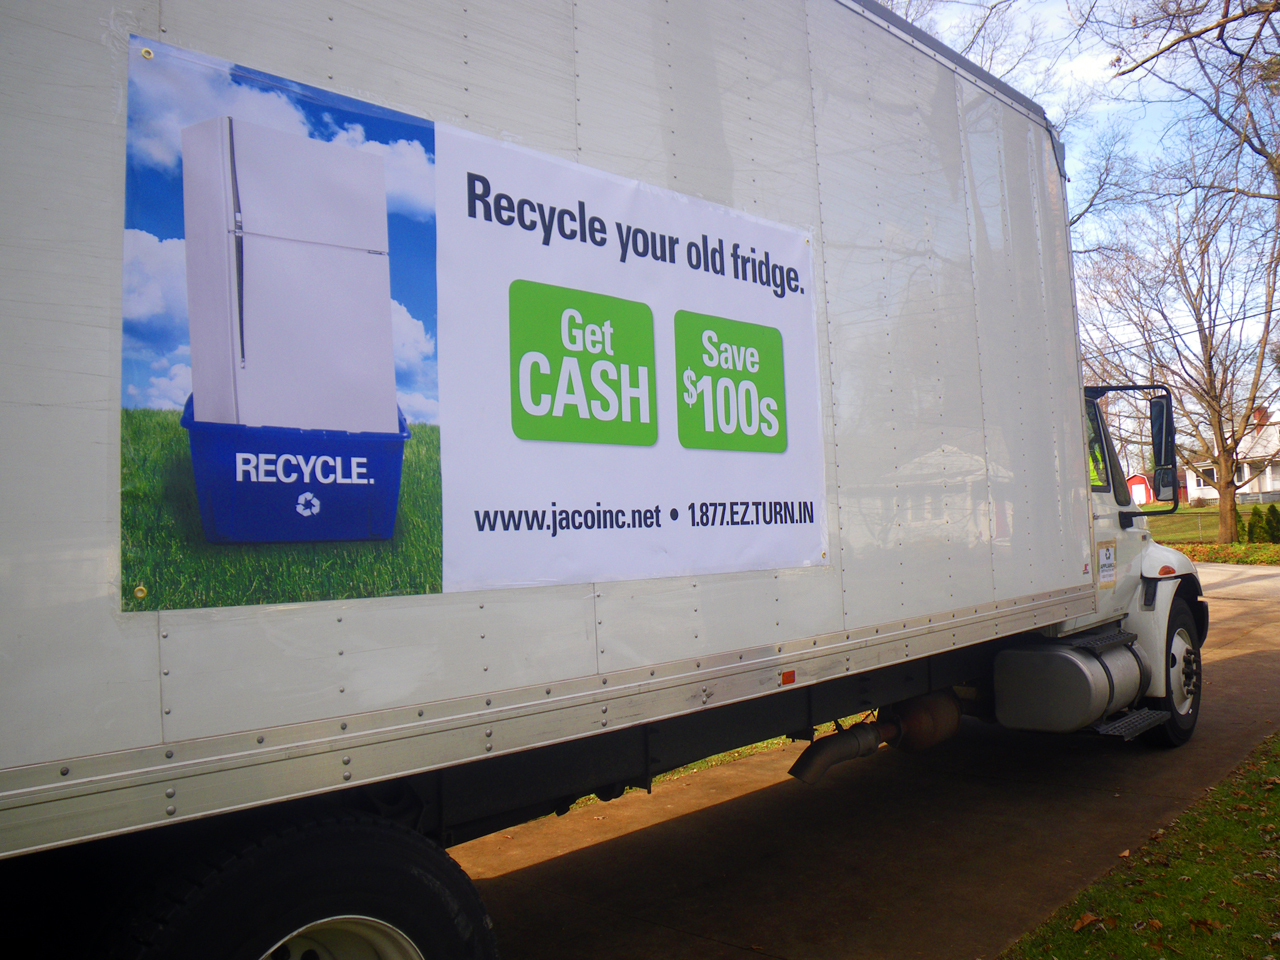 Refrigerator recycling truck